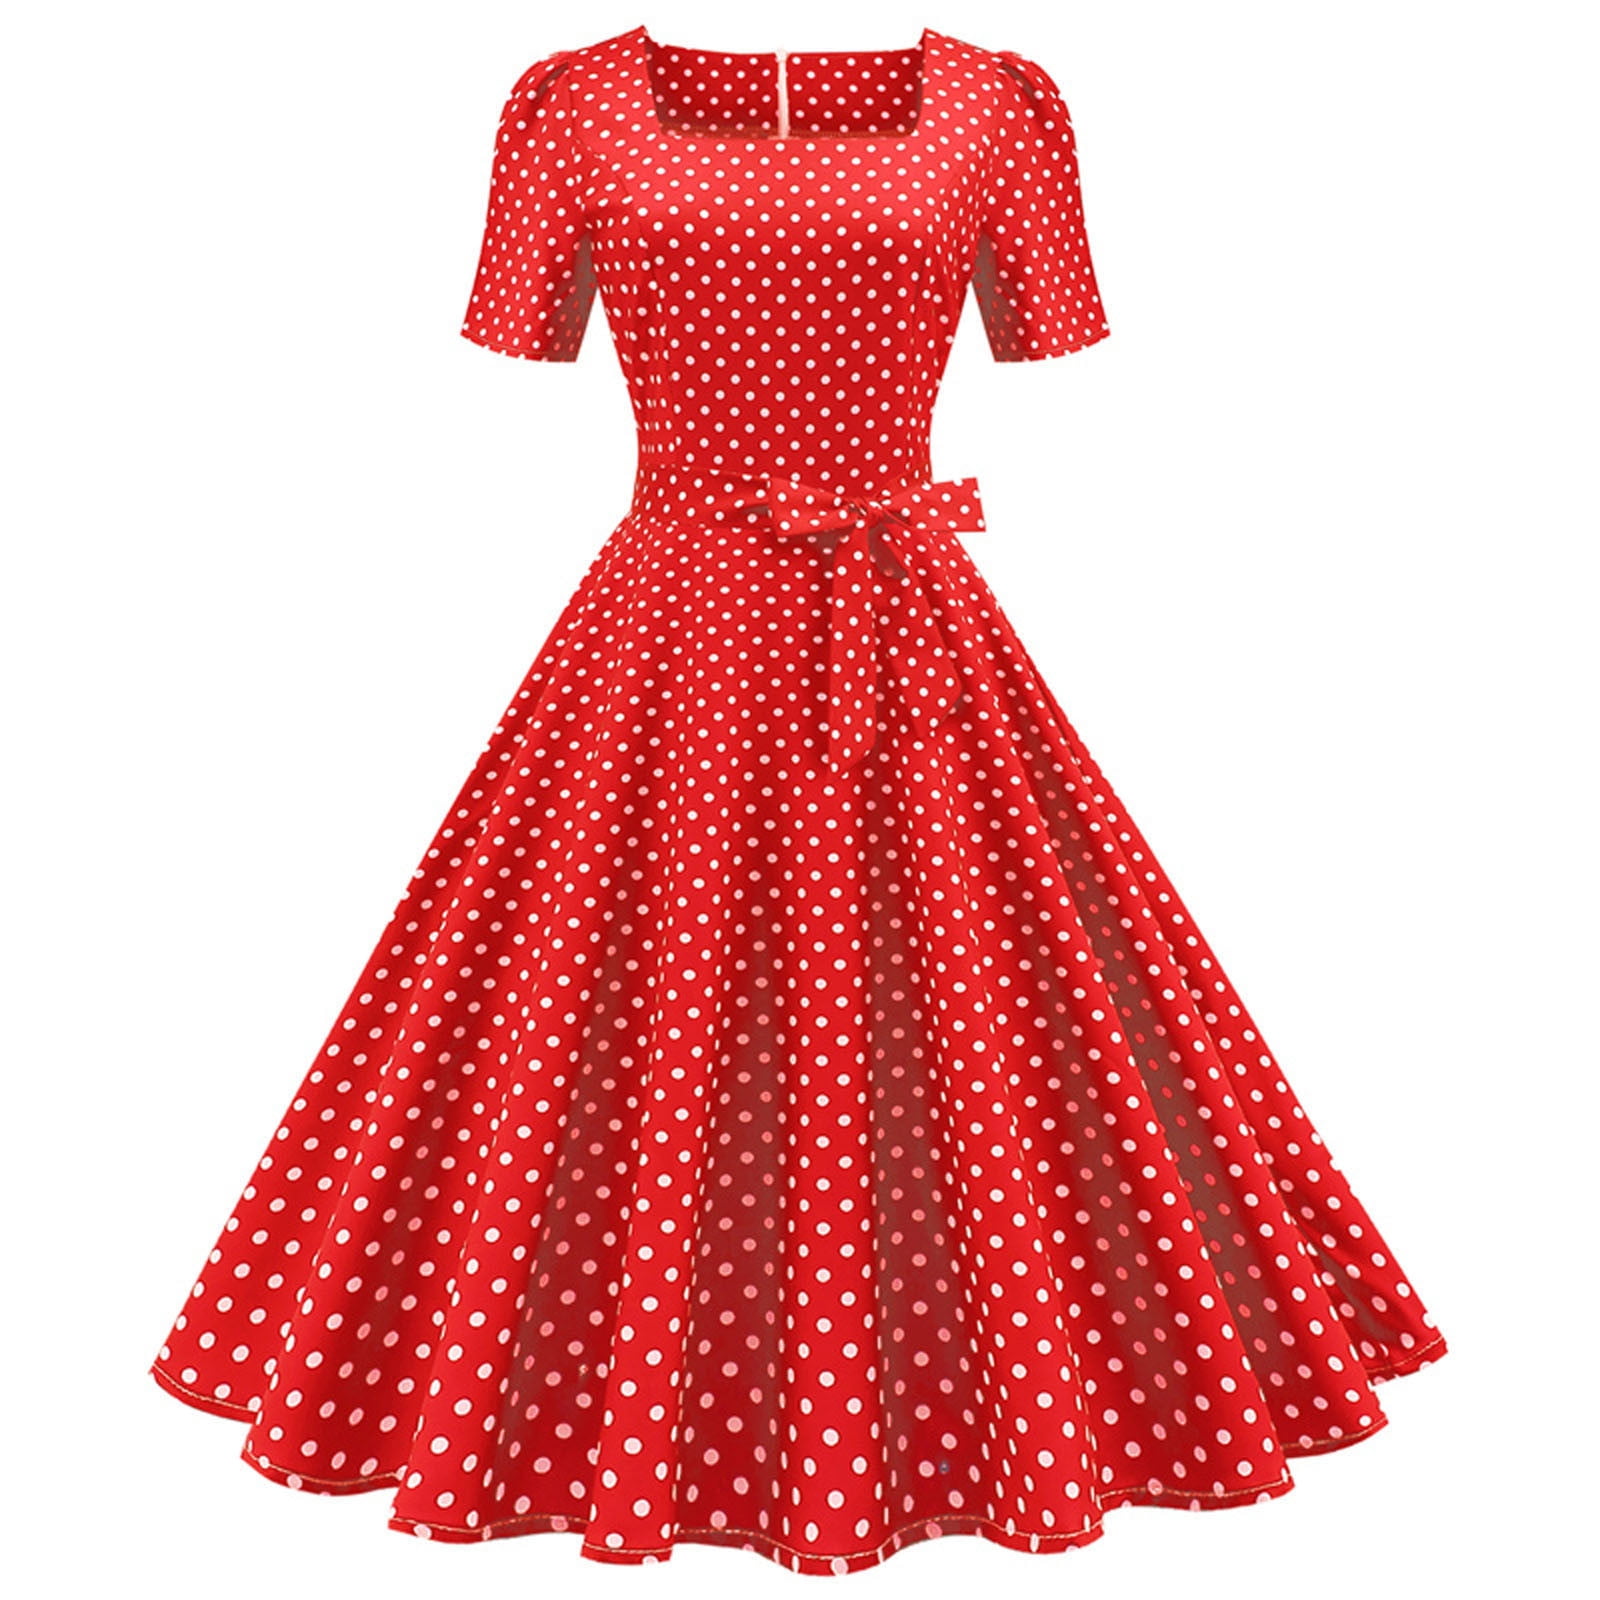 asdoklhq Plus Size Dresses for Women,Women Short Sleeve 1950s Housewife ...